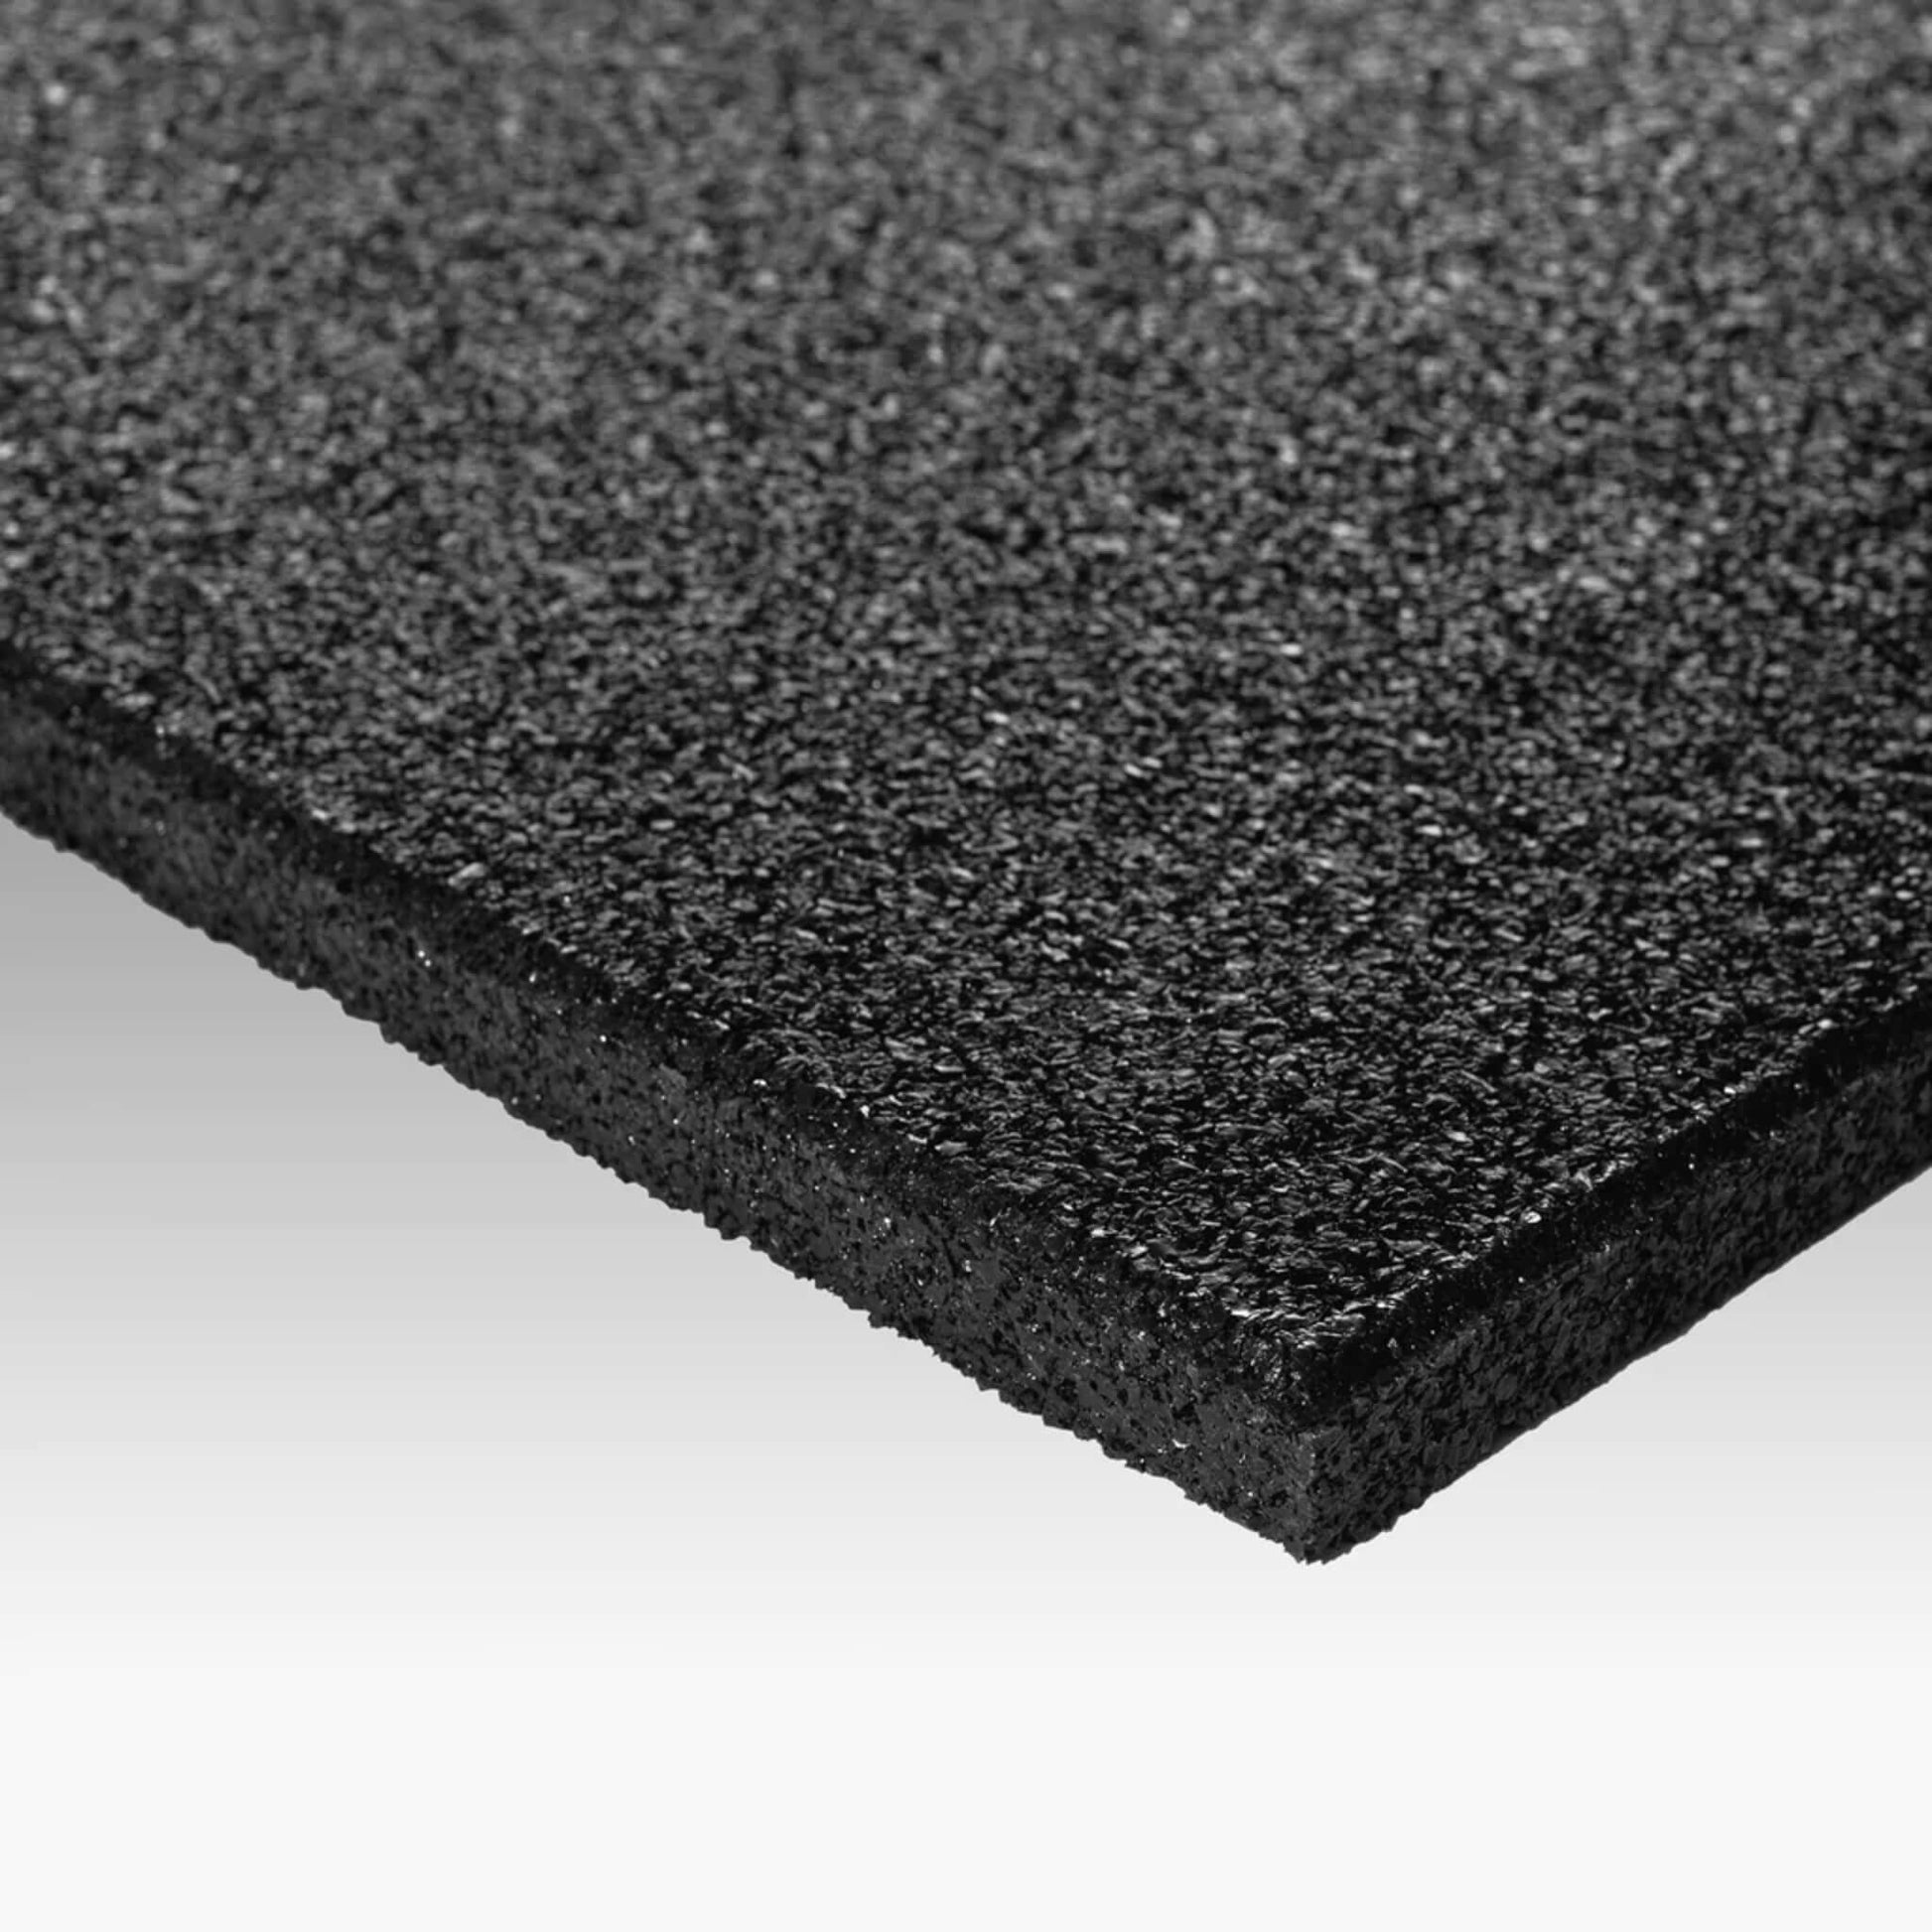 Activ Gym Flooring Tiles (Black) 50cm x 50cm x 30mm edge